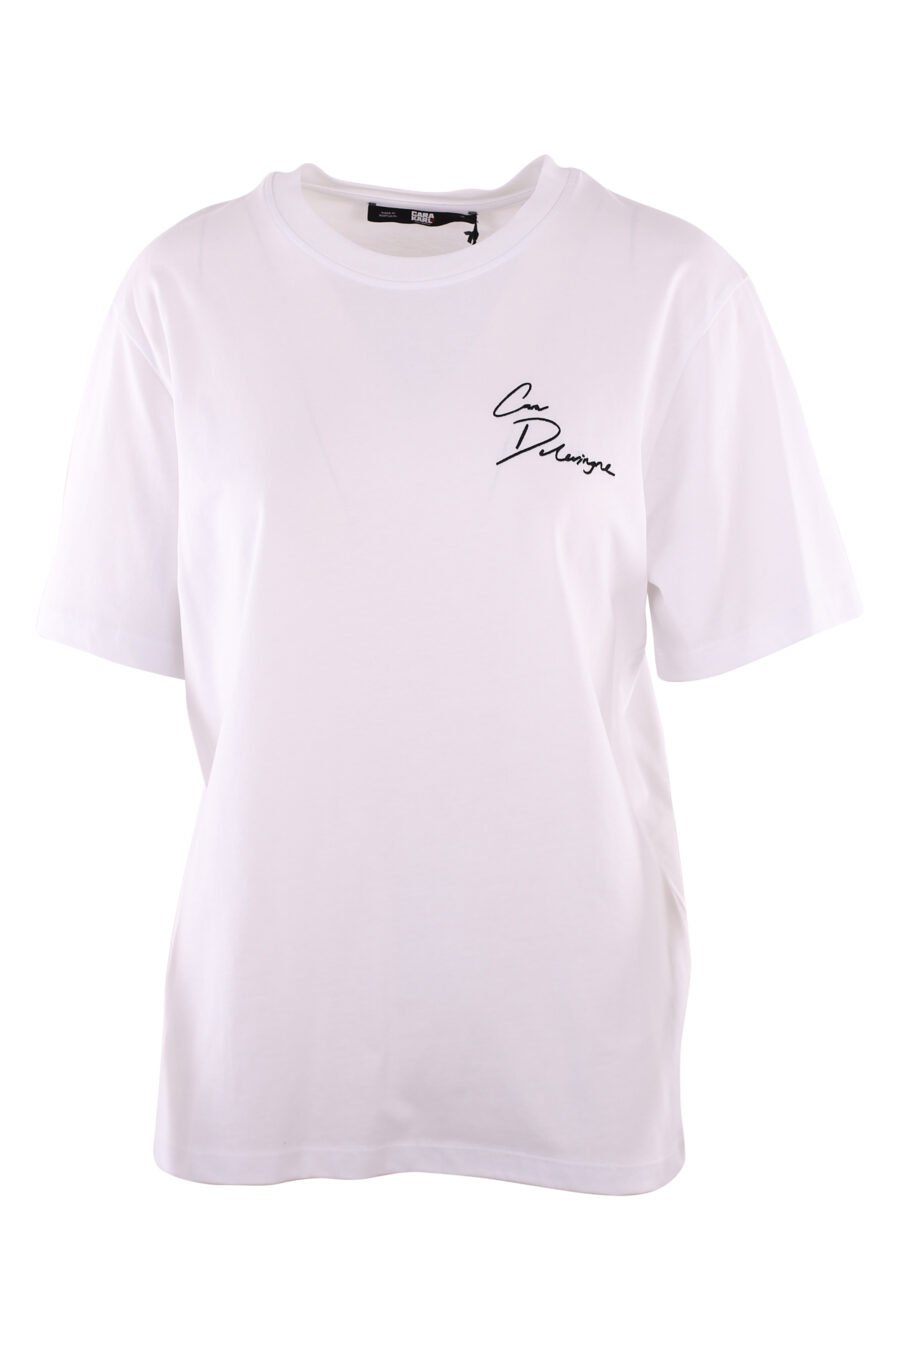 T-shirt branca com logótipo de assinatura "face" preto - IMG 6088